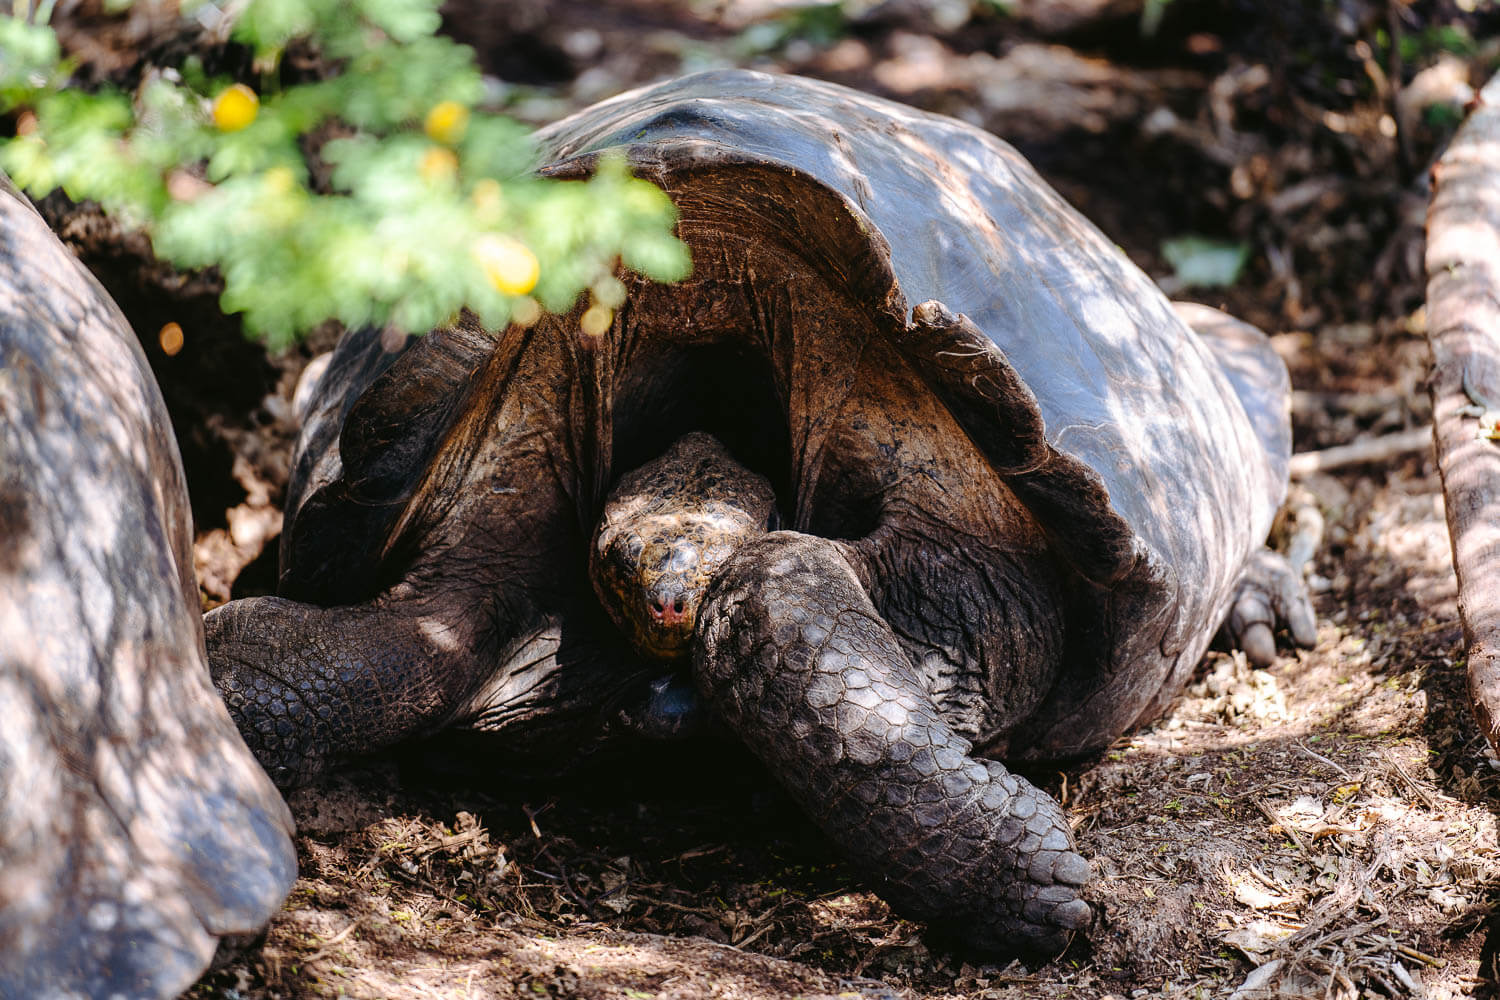 Giant tortoise at the Charles Darwin Research Station in Santa Cruz, Galápagos